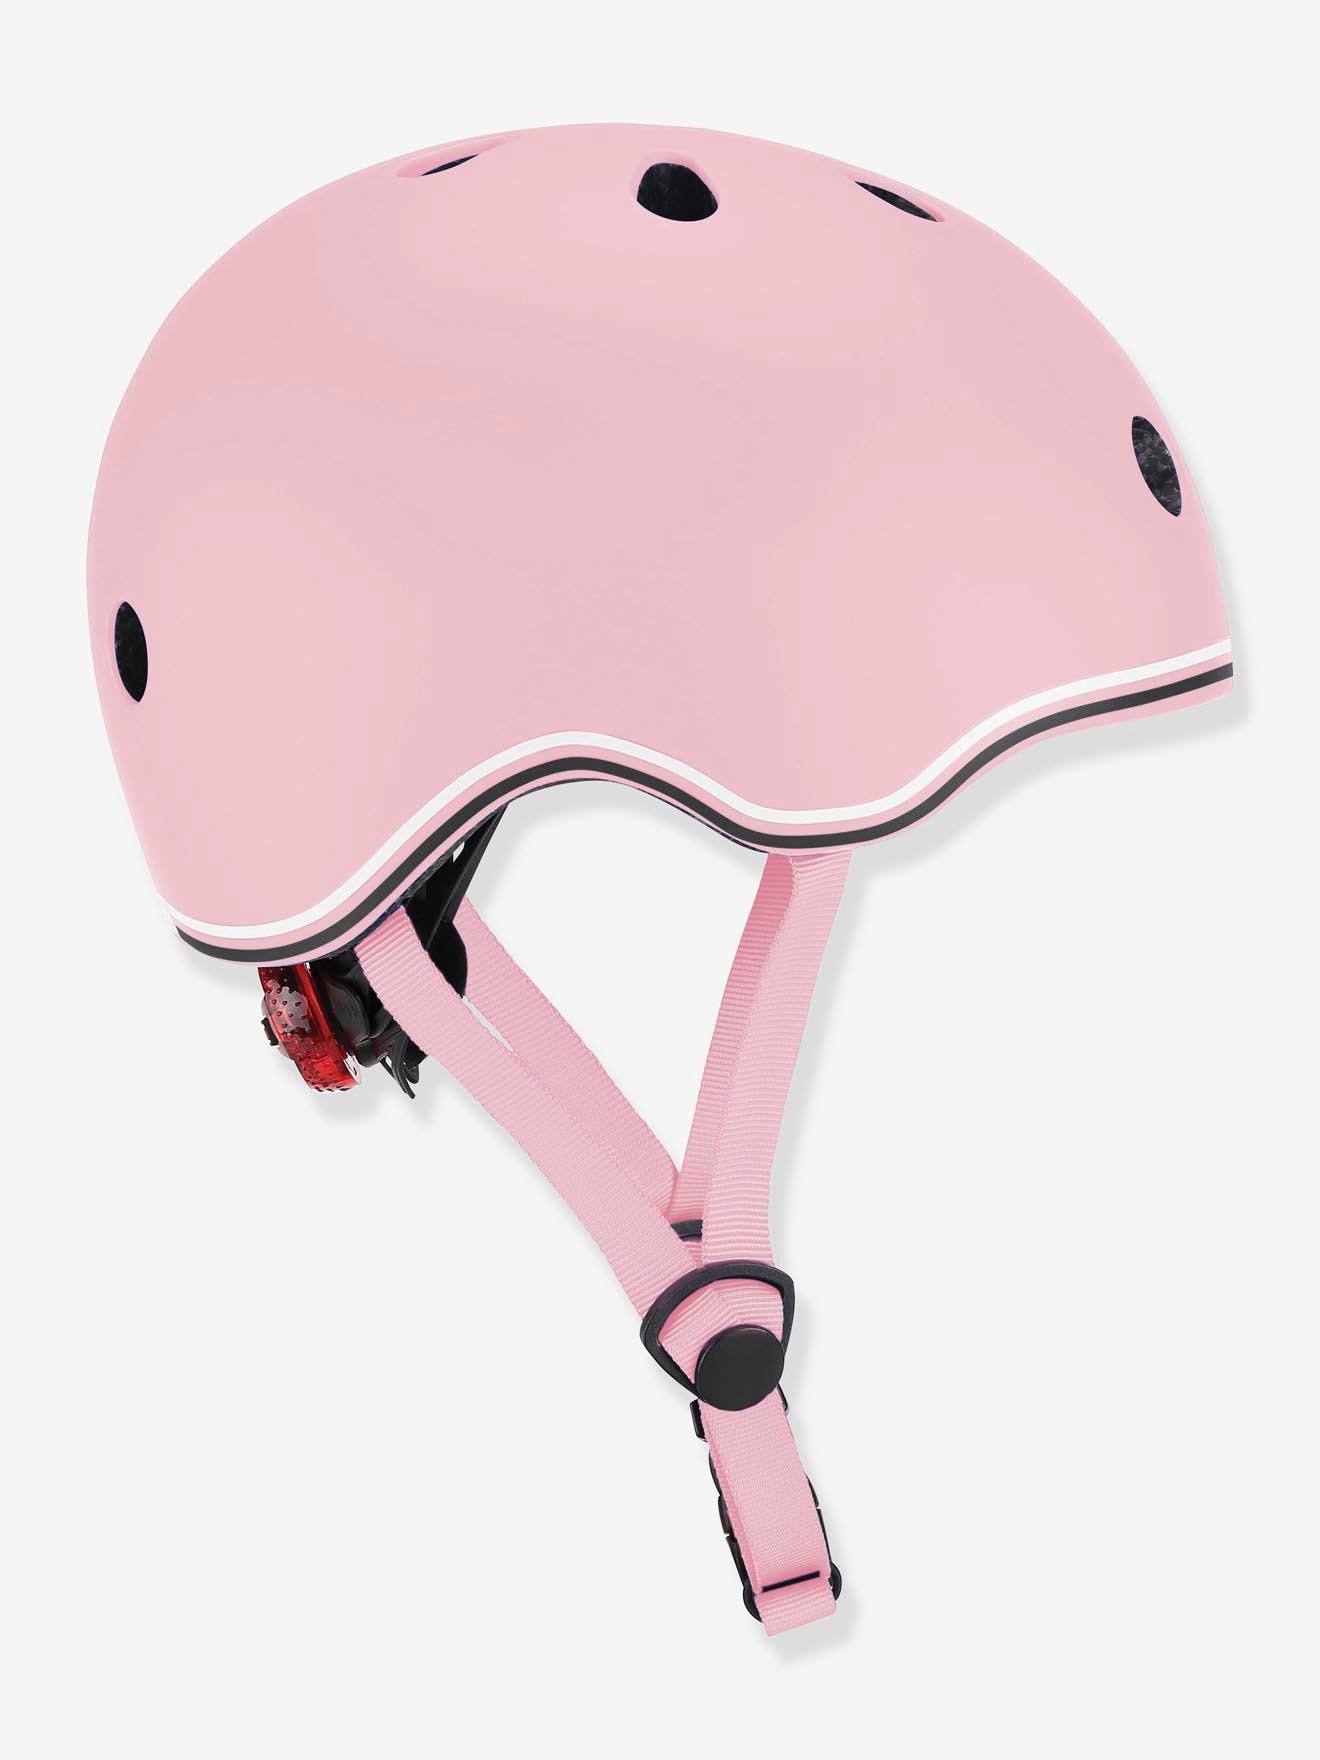 Go Up Helmet, by GLOBBER light pink